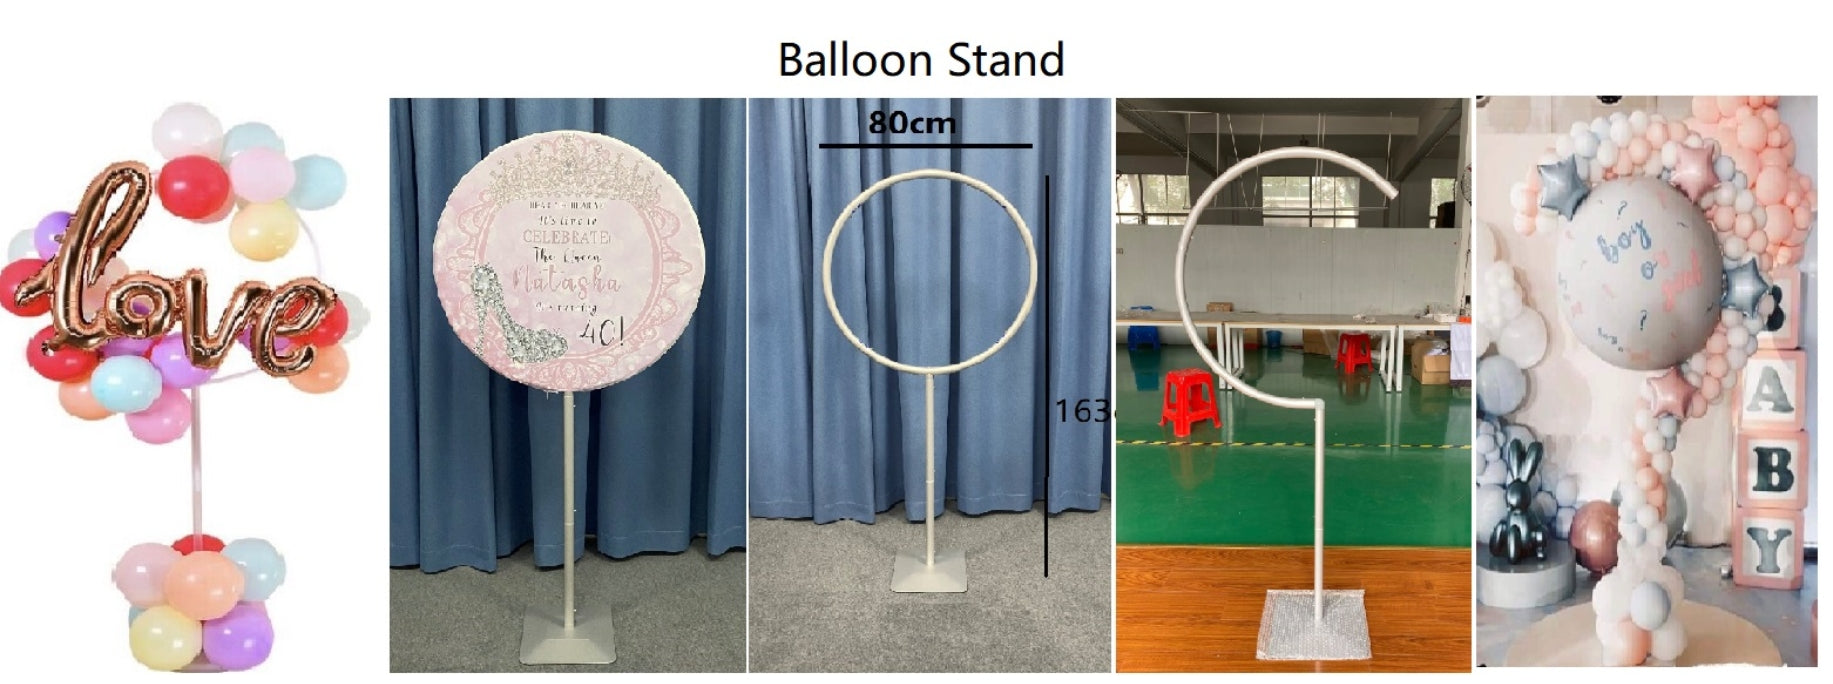 Aluminium Balloon Stand / Question Mark Balloon Stand